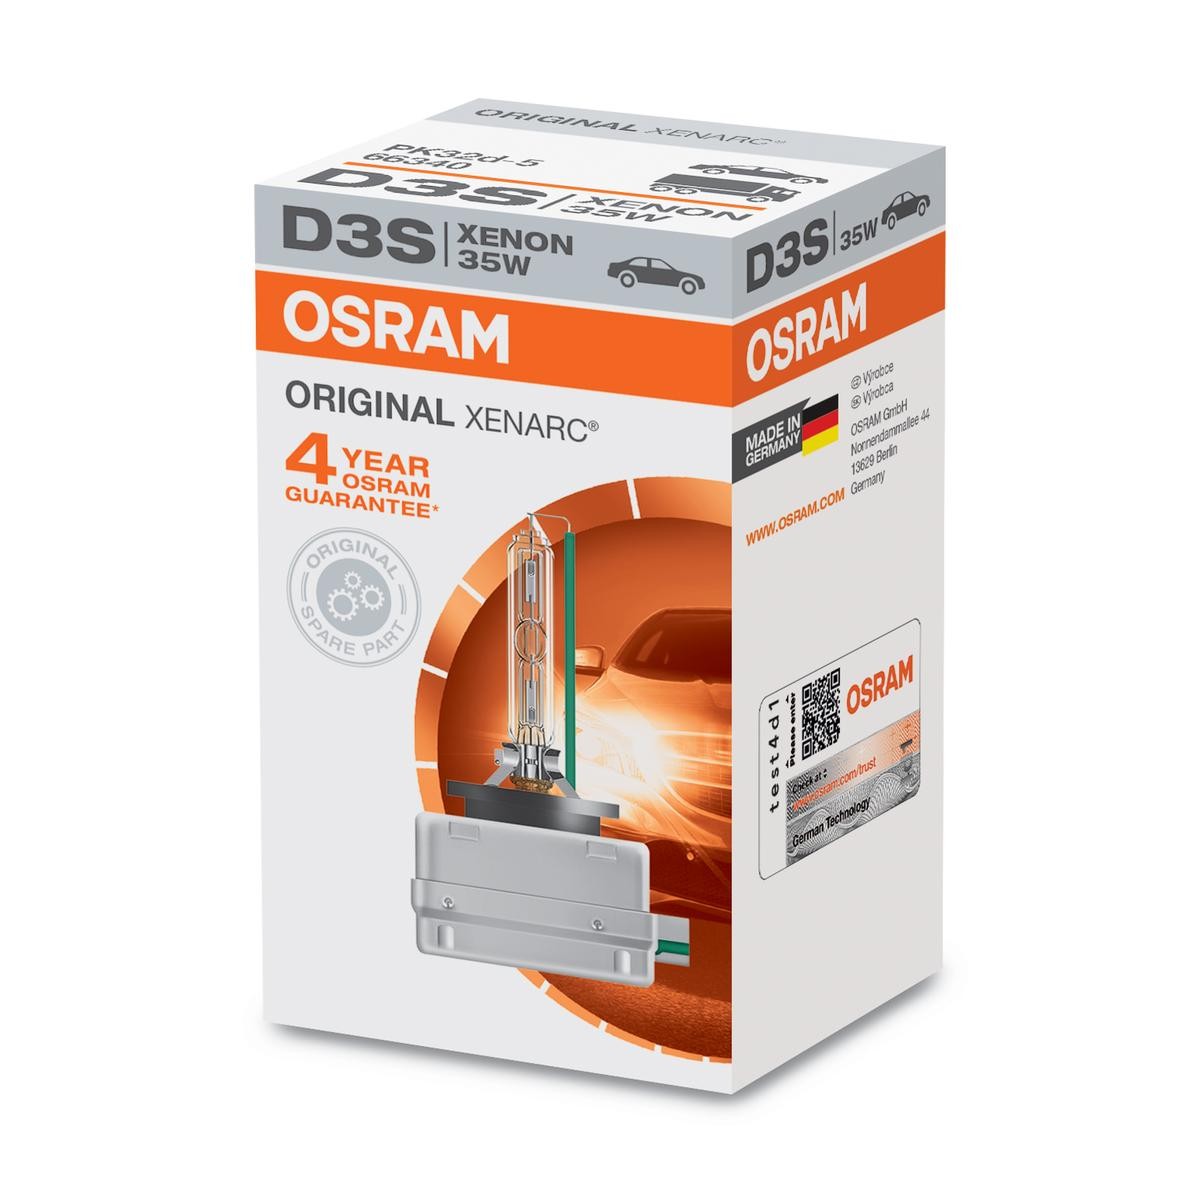 D3S OSRAM XENARC ORIGINAL D3S (gasontladingslamp) 42V 35W PK32d-5 4500K Xenon Gloeilamp, verstraler 66340 koop goedkoop